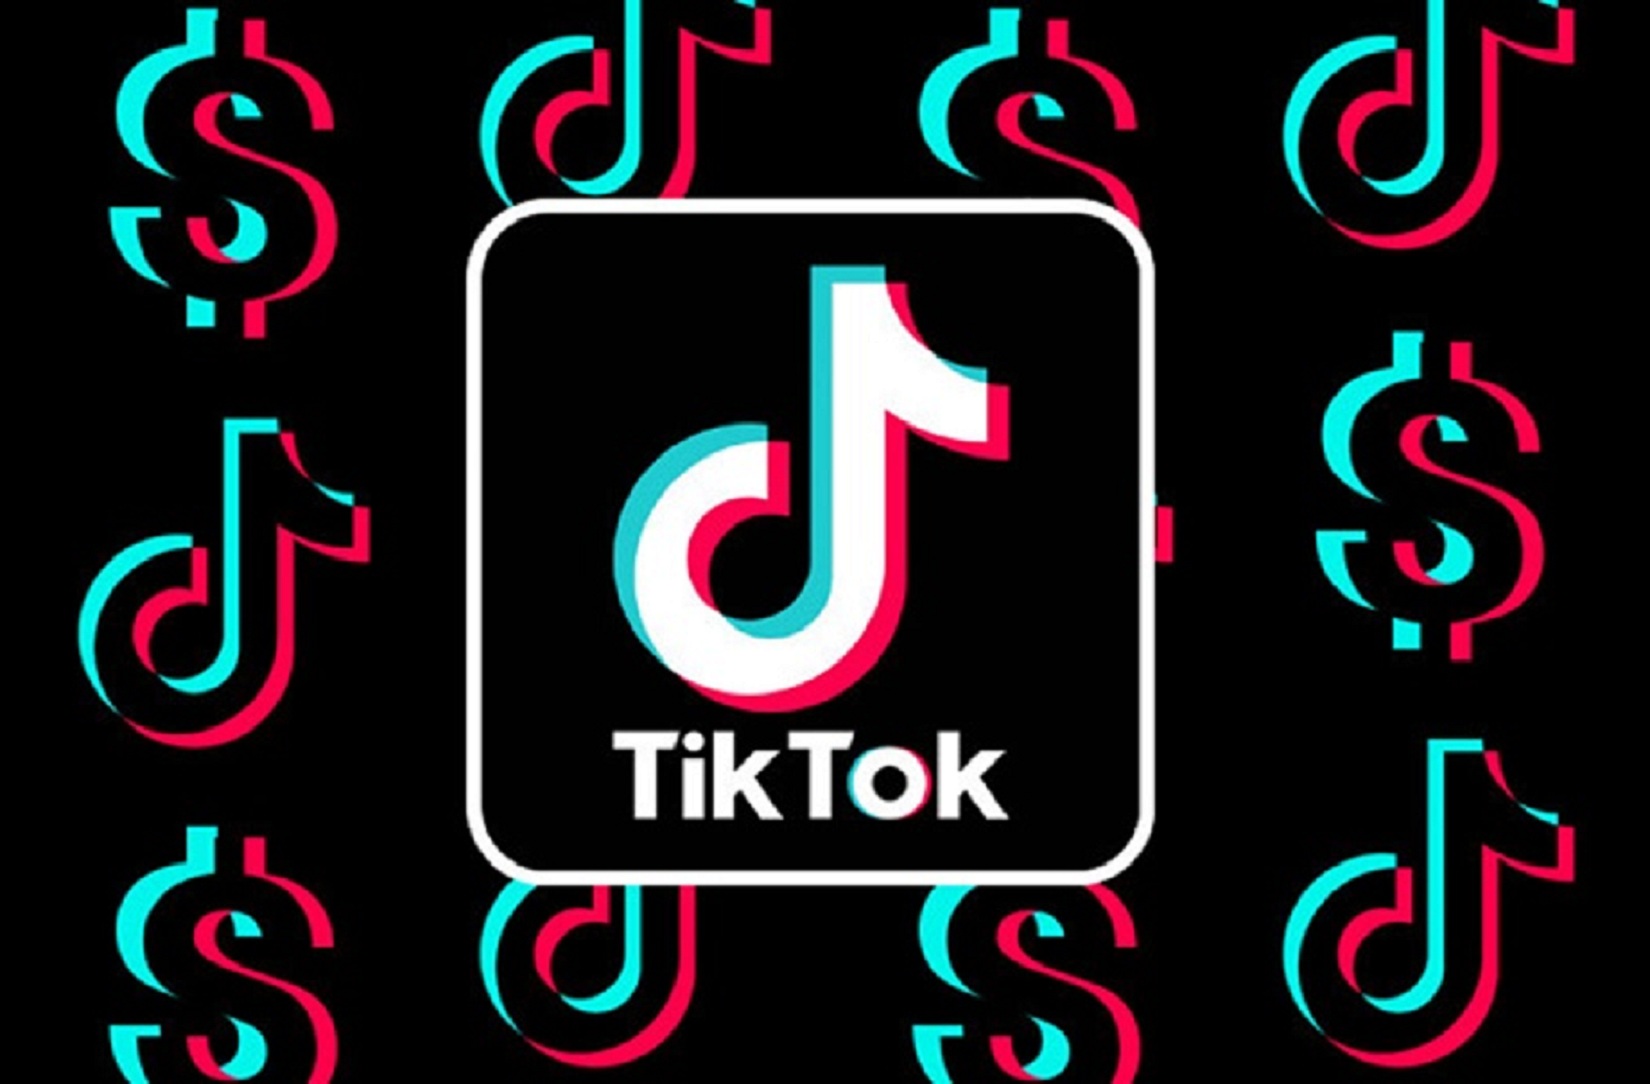 tiktok without watermark app